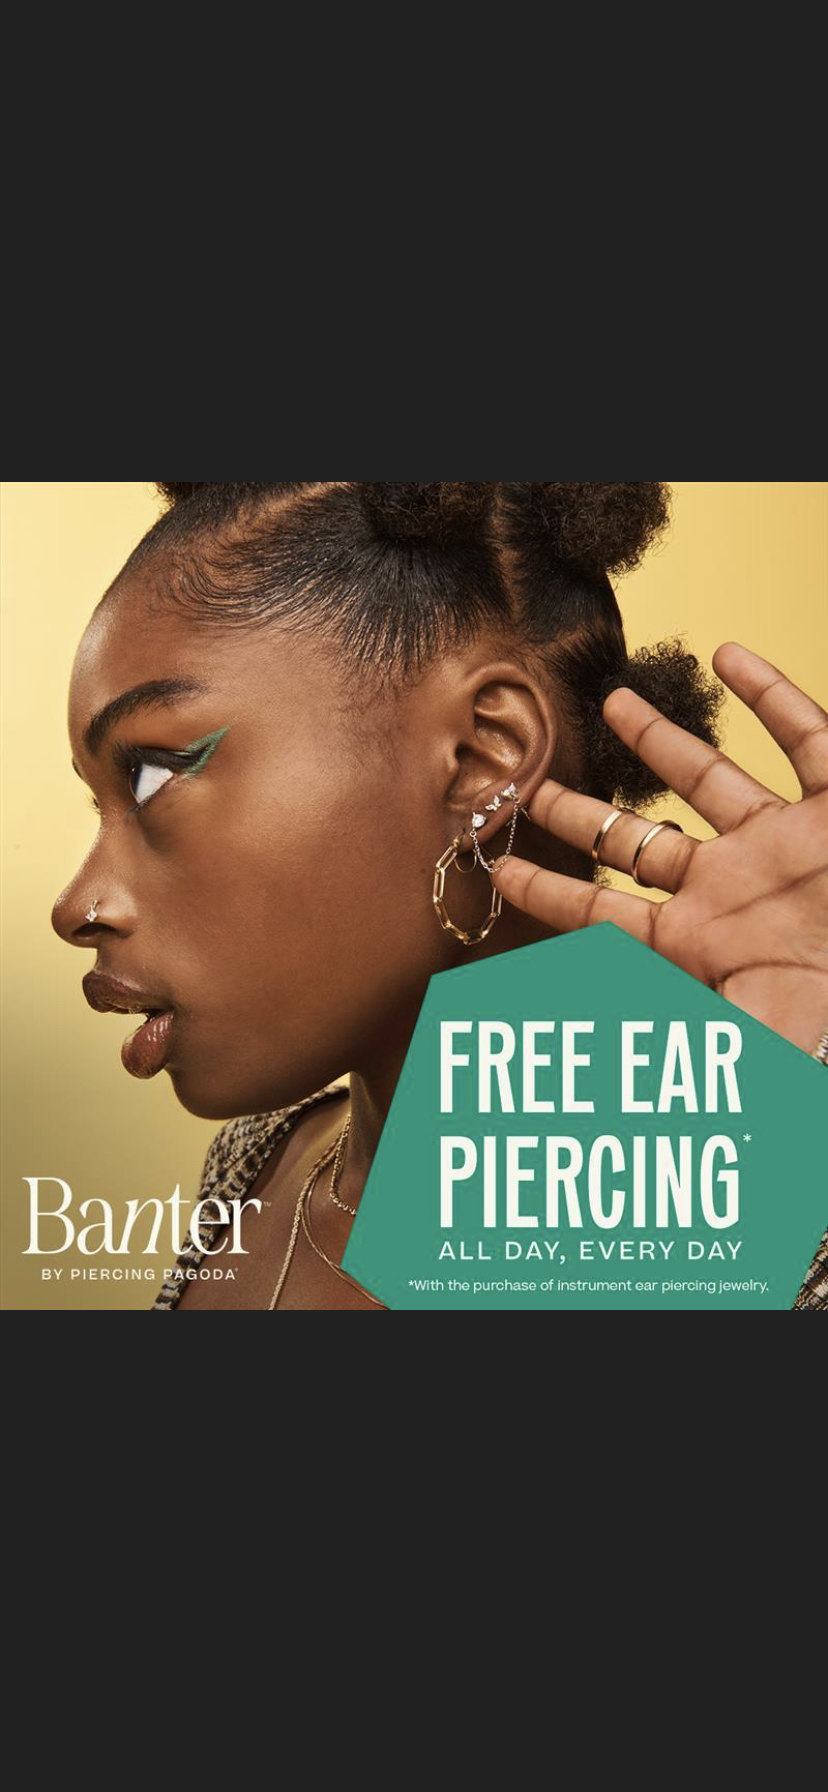 Free Ear Piercing from Piercing Pagoda